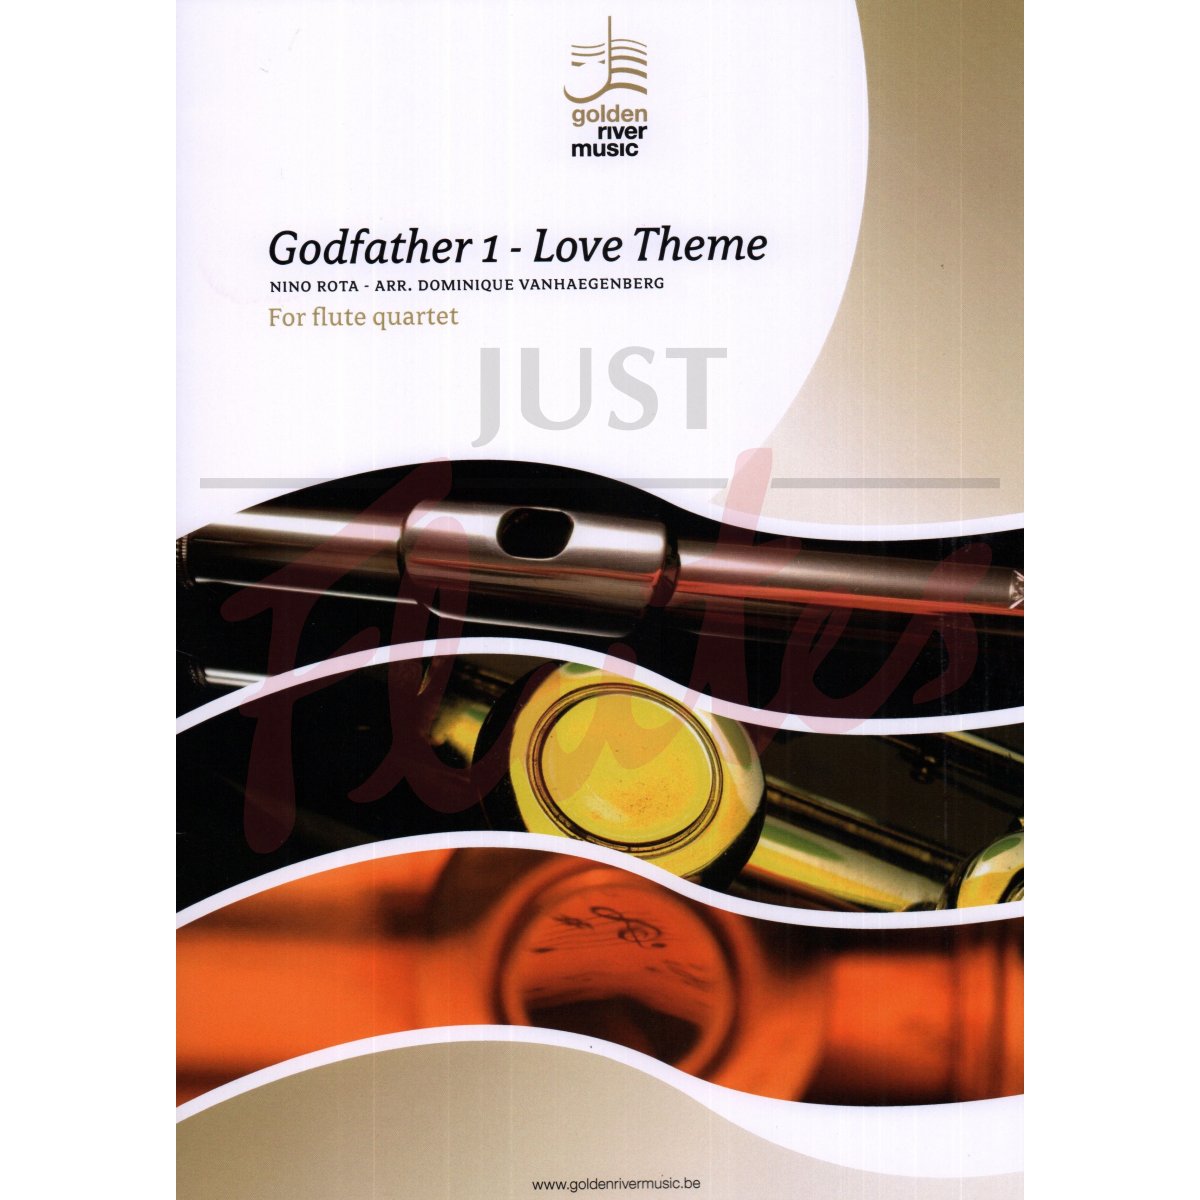 The Godfather 1 Love Theme for Flute Quartet